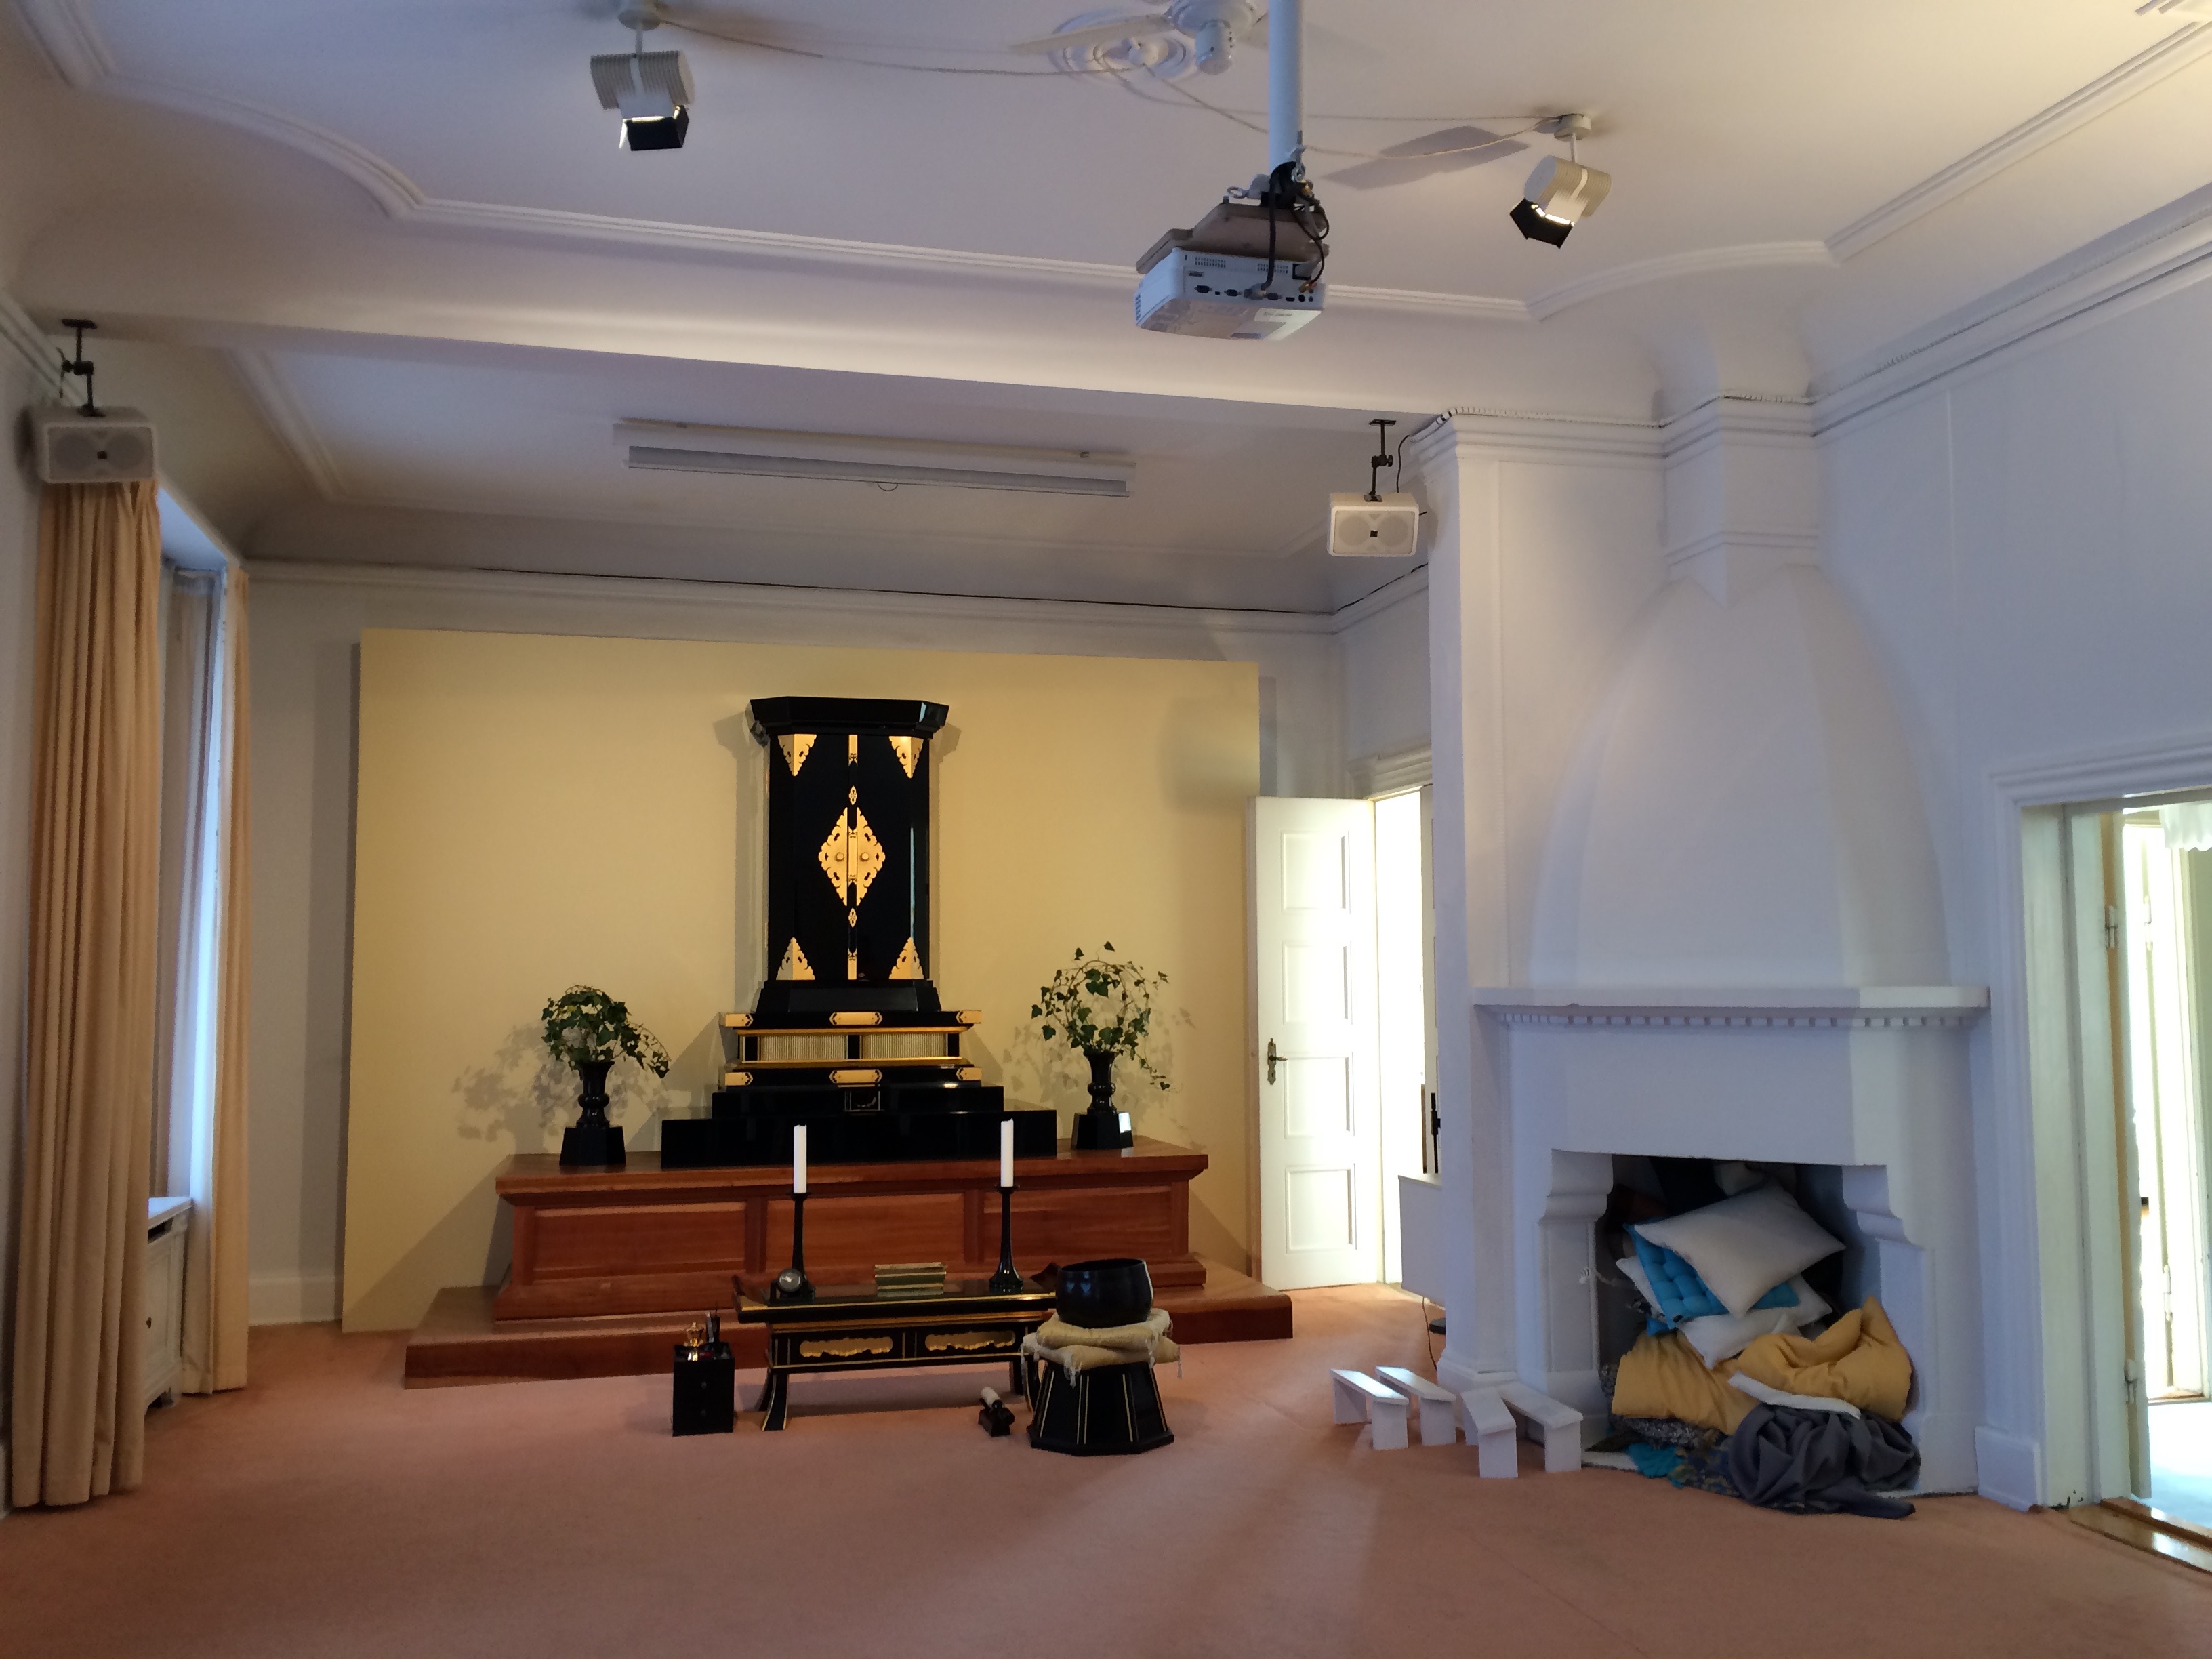 Det buddhistiske alter i stuen.